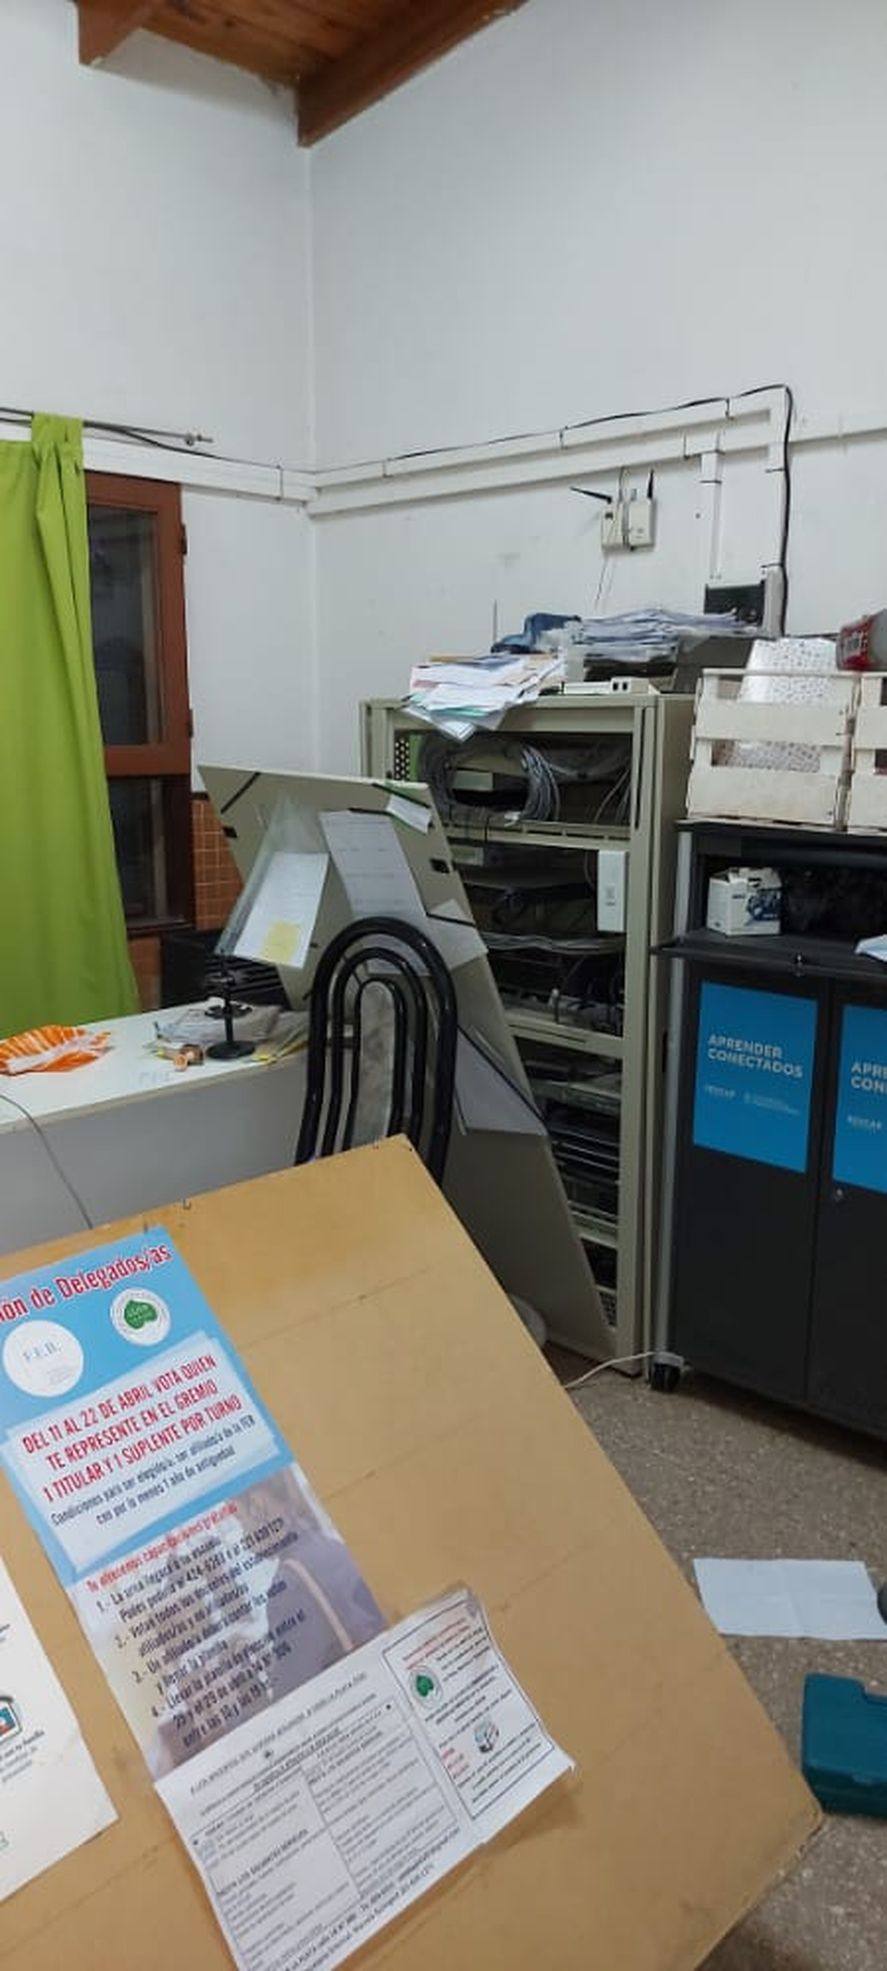 La Plata: provocan daño e intentan robar 11 notebooks de una escuela